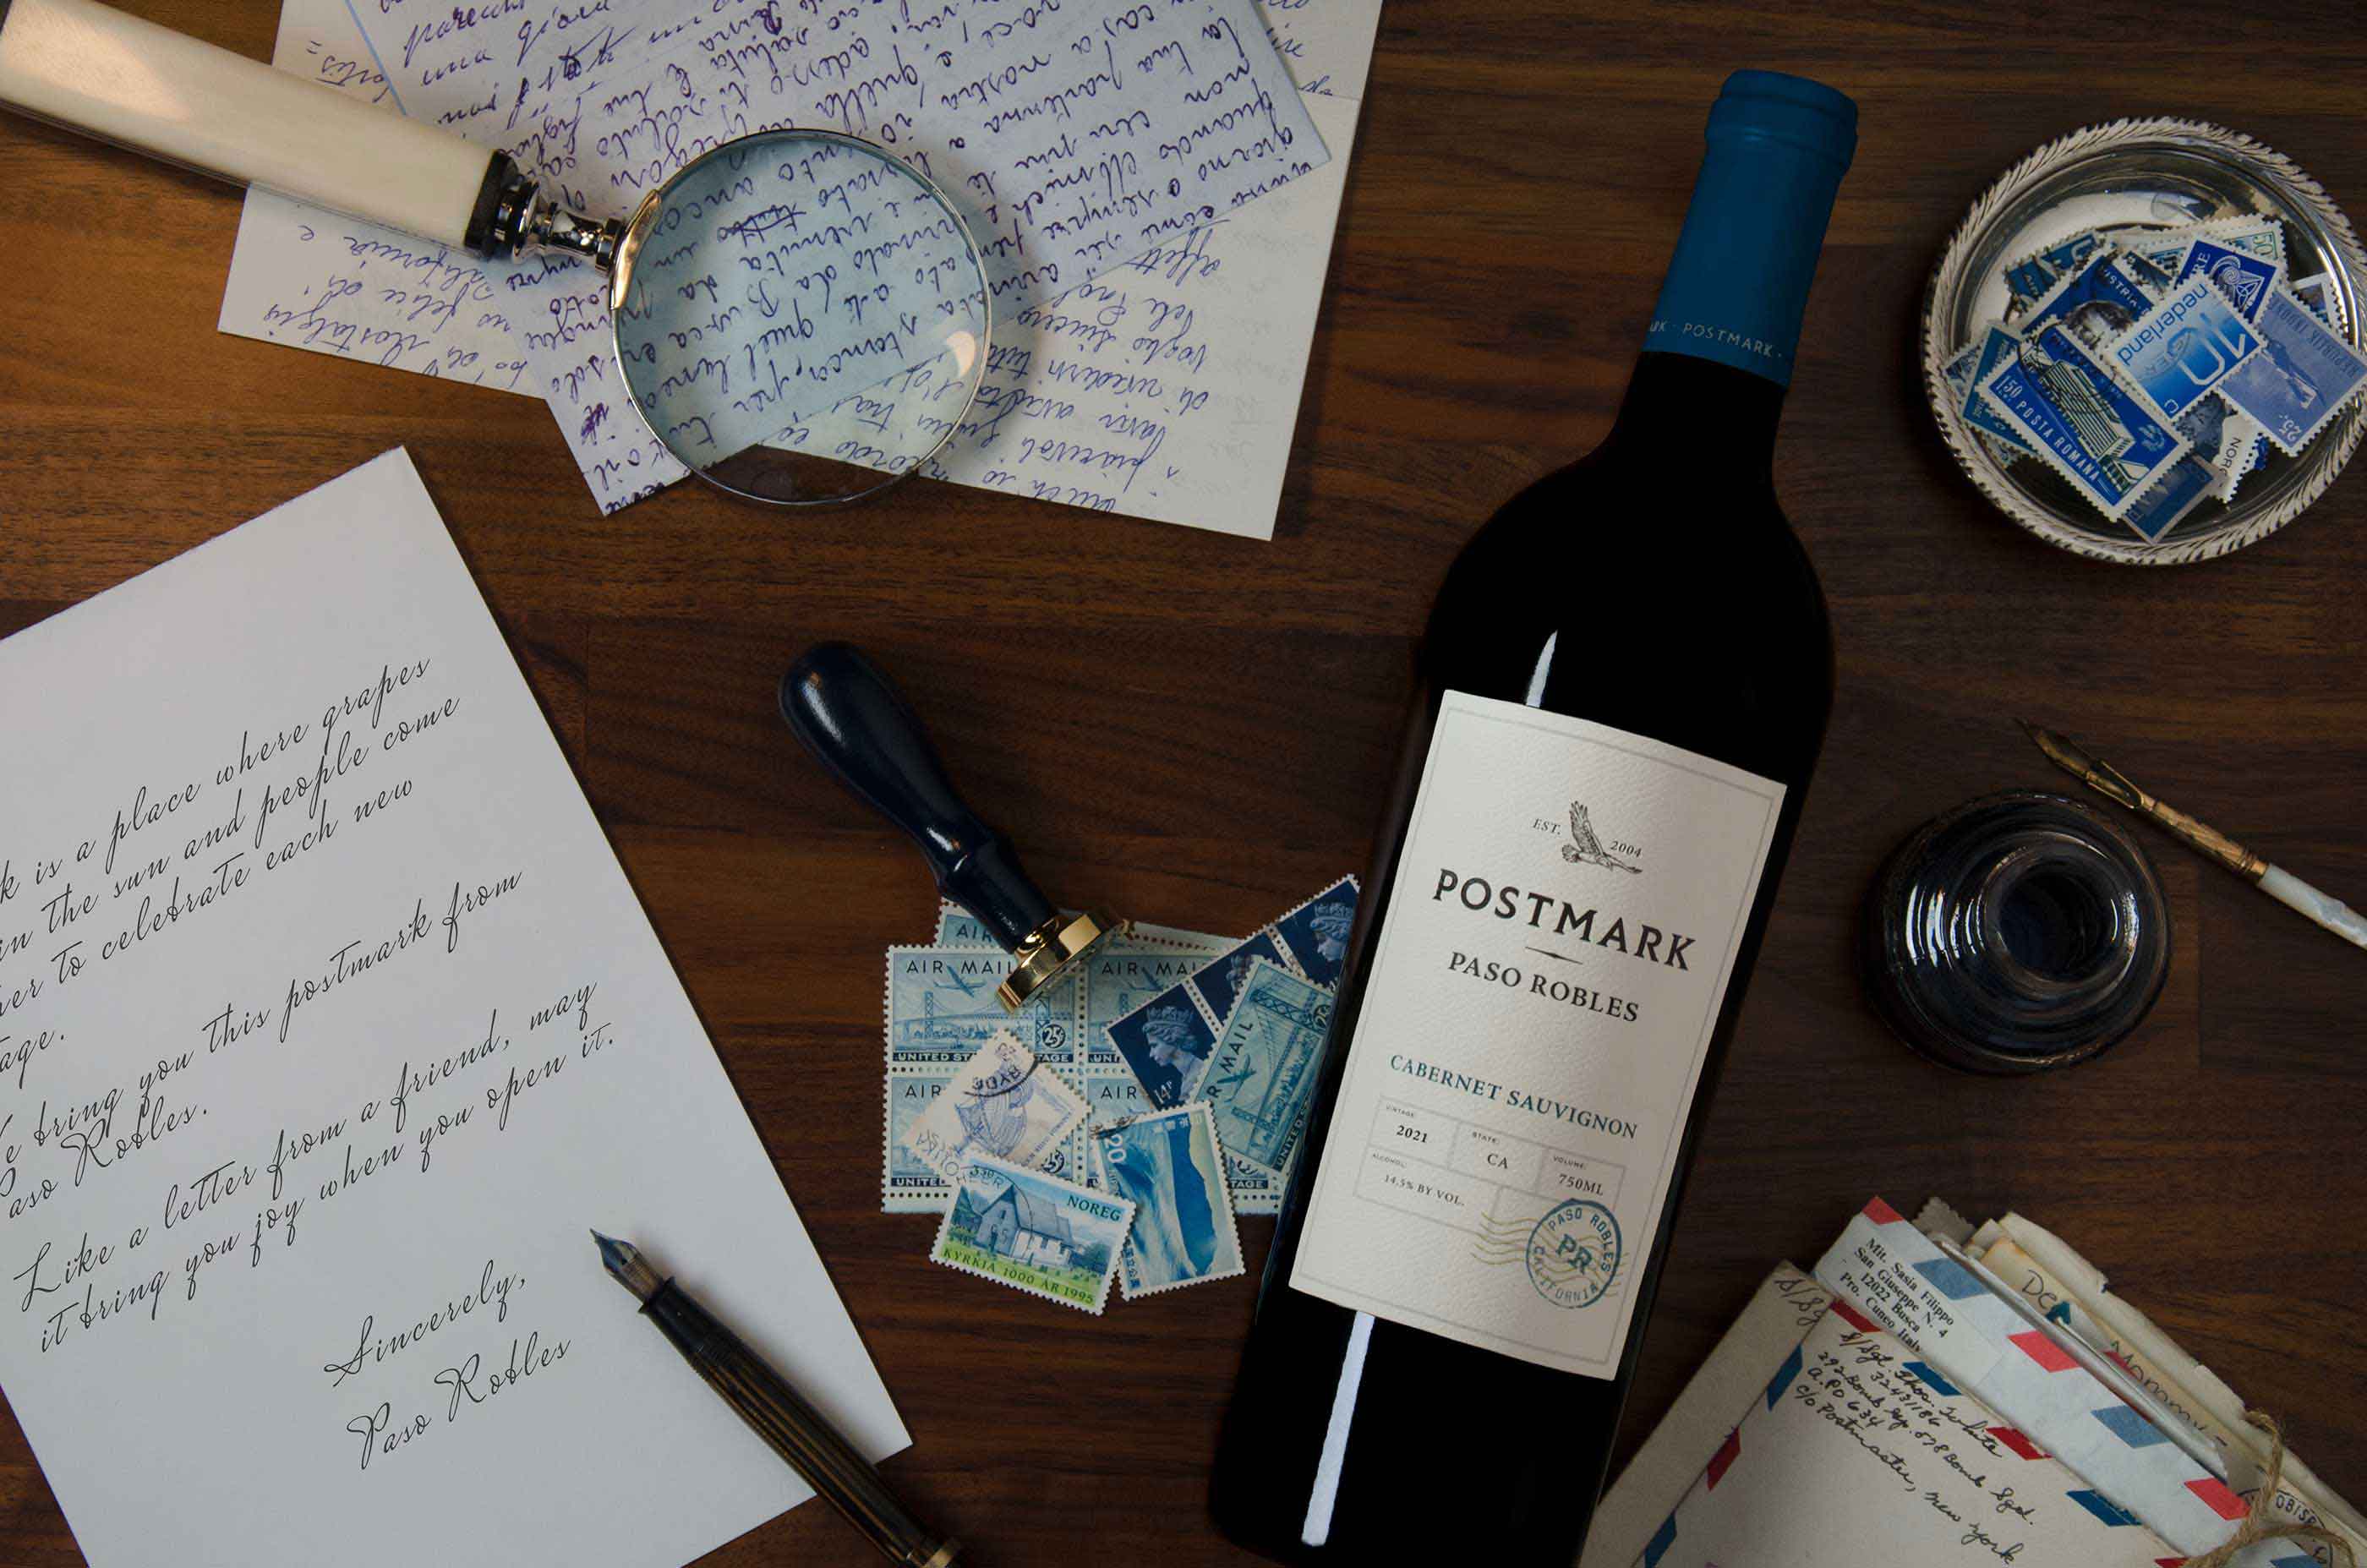 The Official Postmark Wines, Extraordinary Cabernet Sauvignon